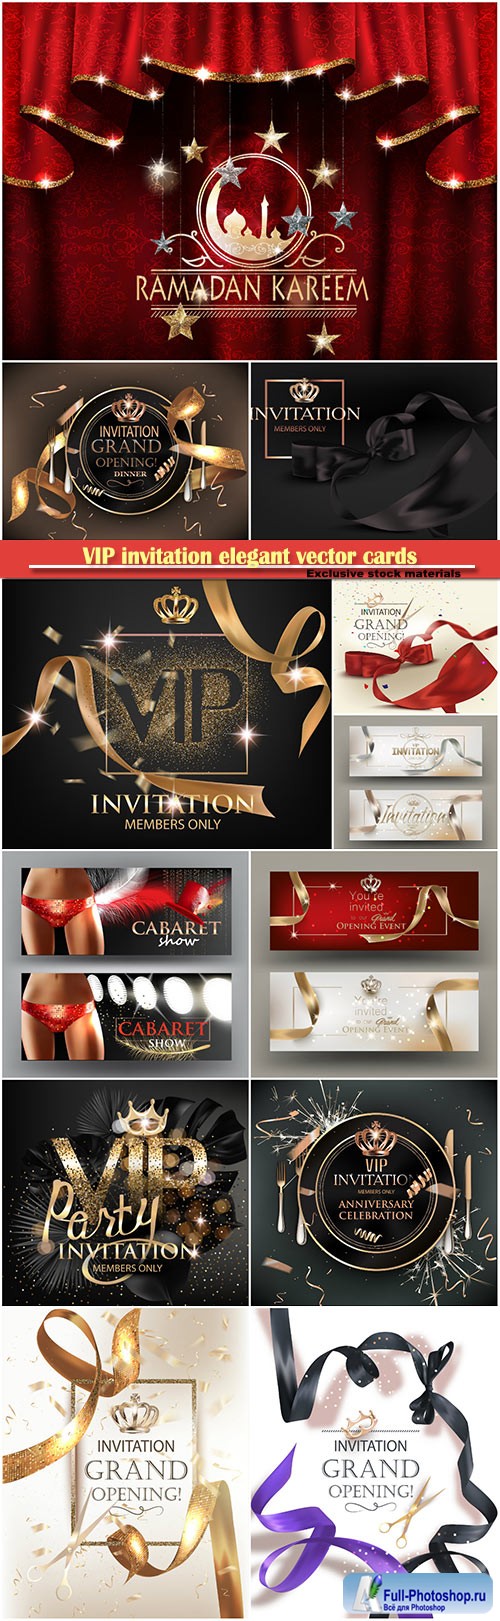 VIP invitation vector card, grand opening and Ramadan kareem card